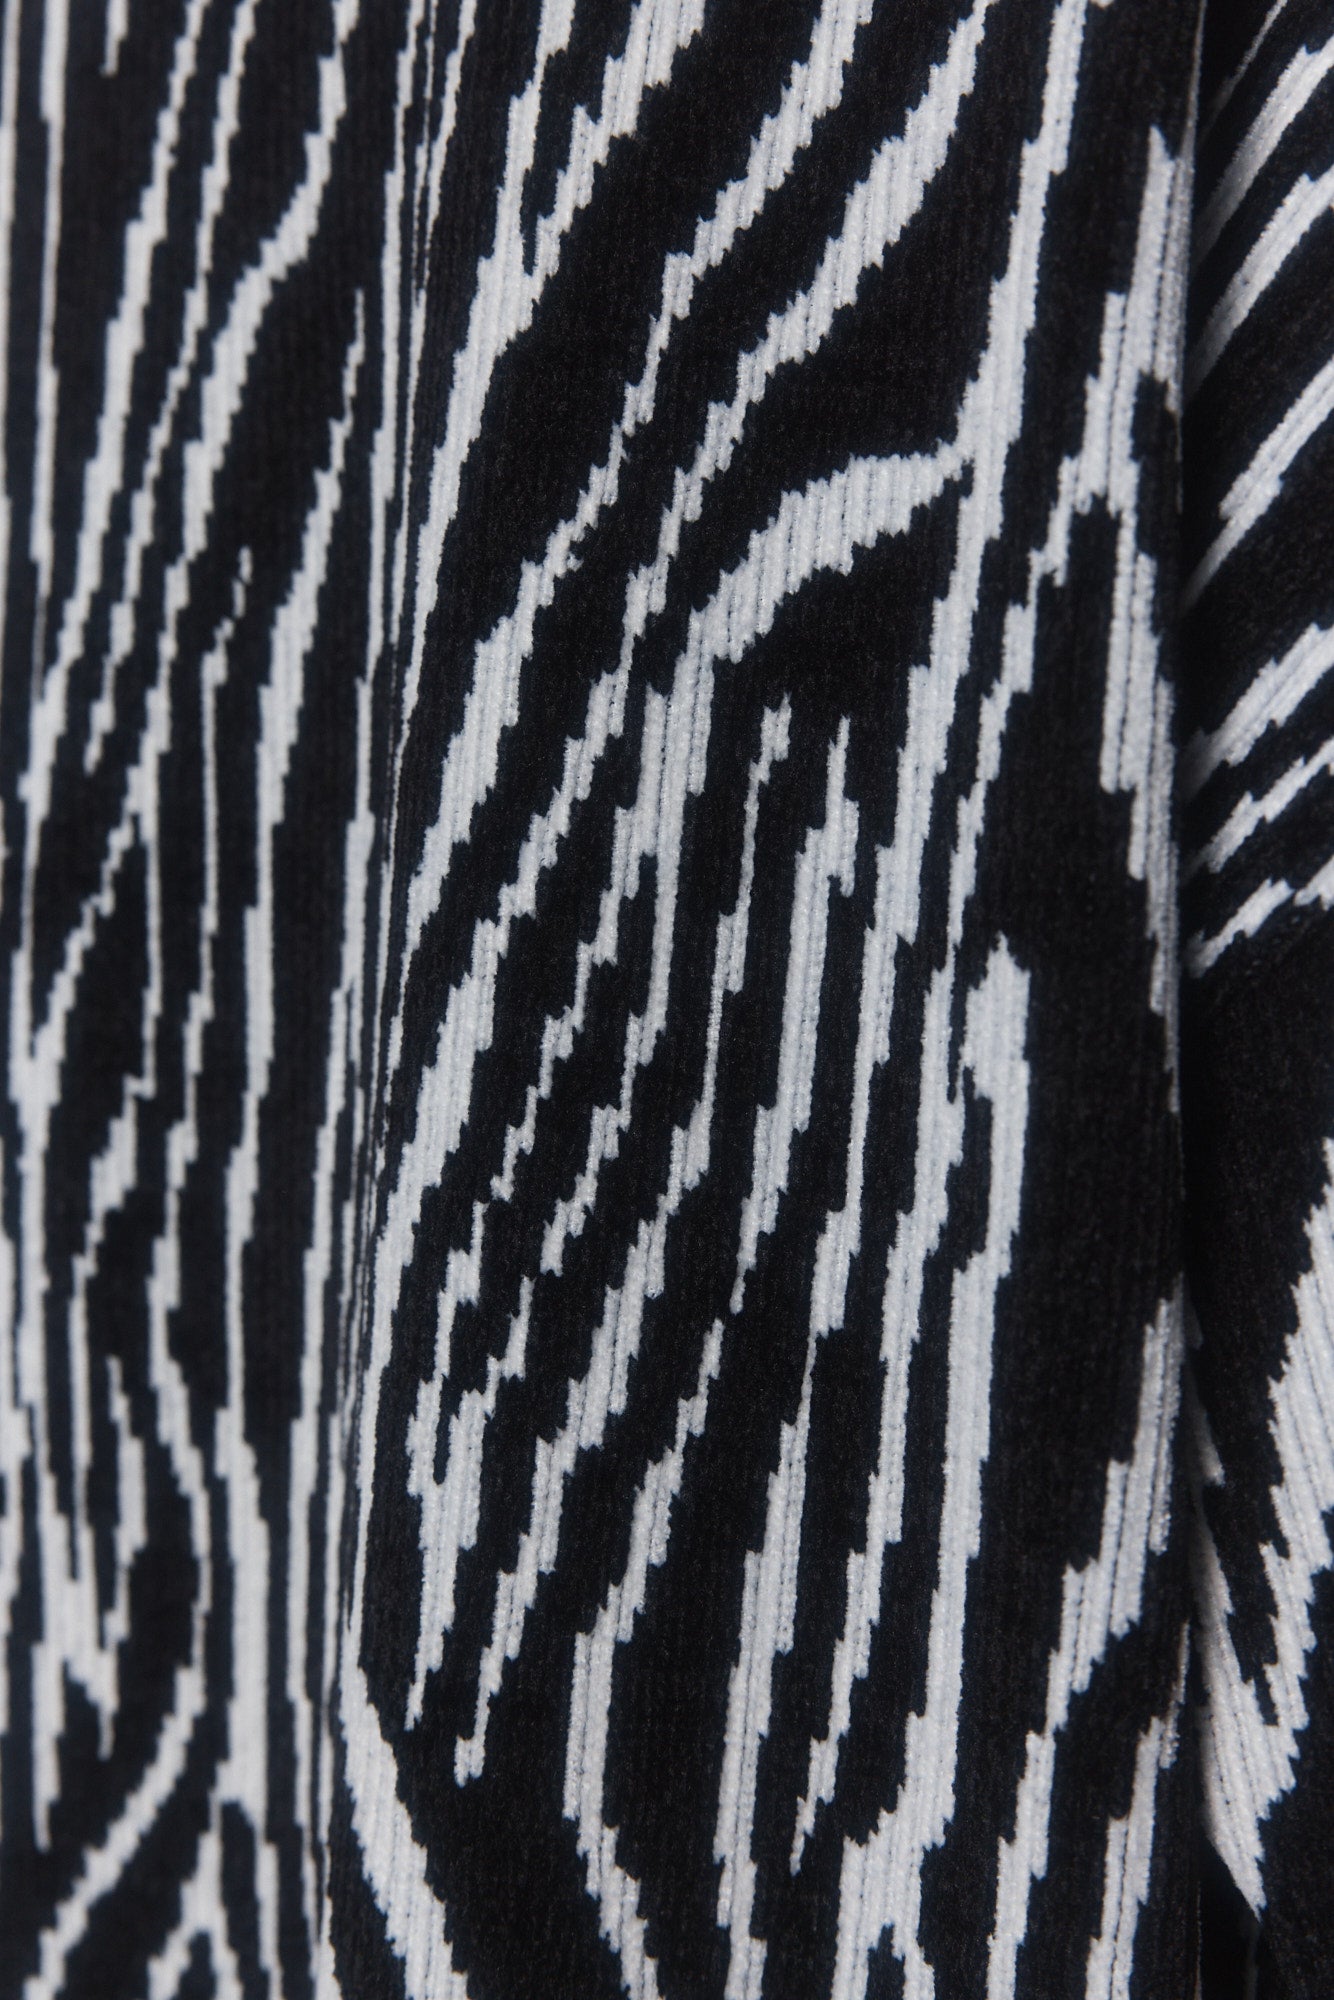 Loose black and gray patterned jacket | Dougan